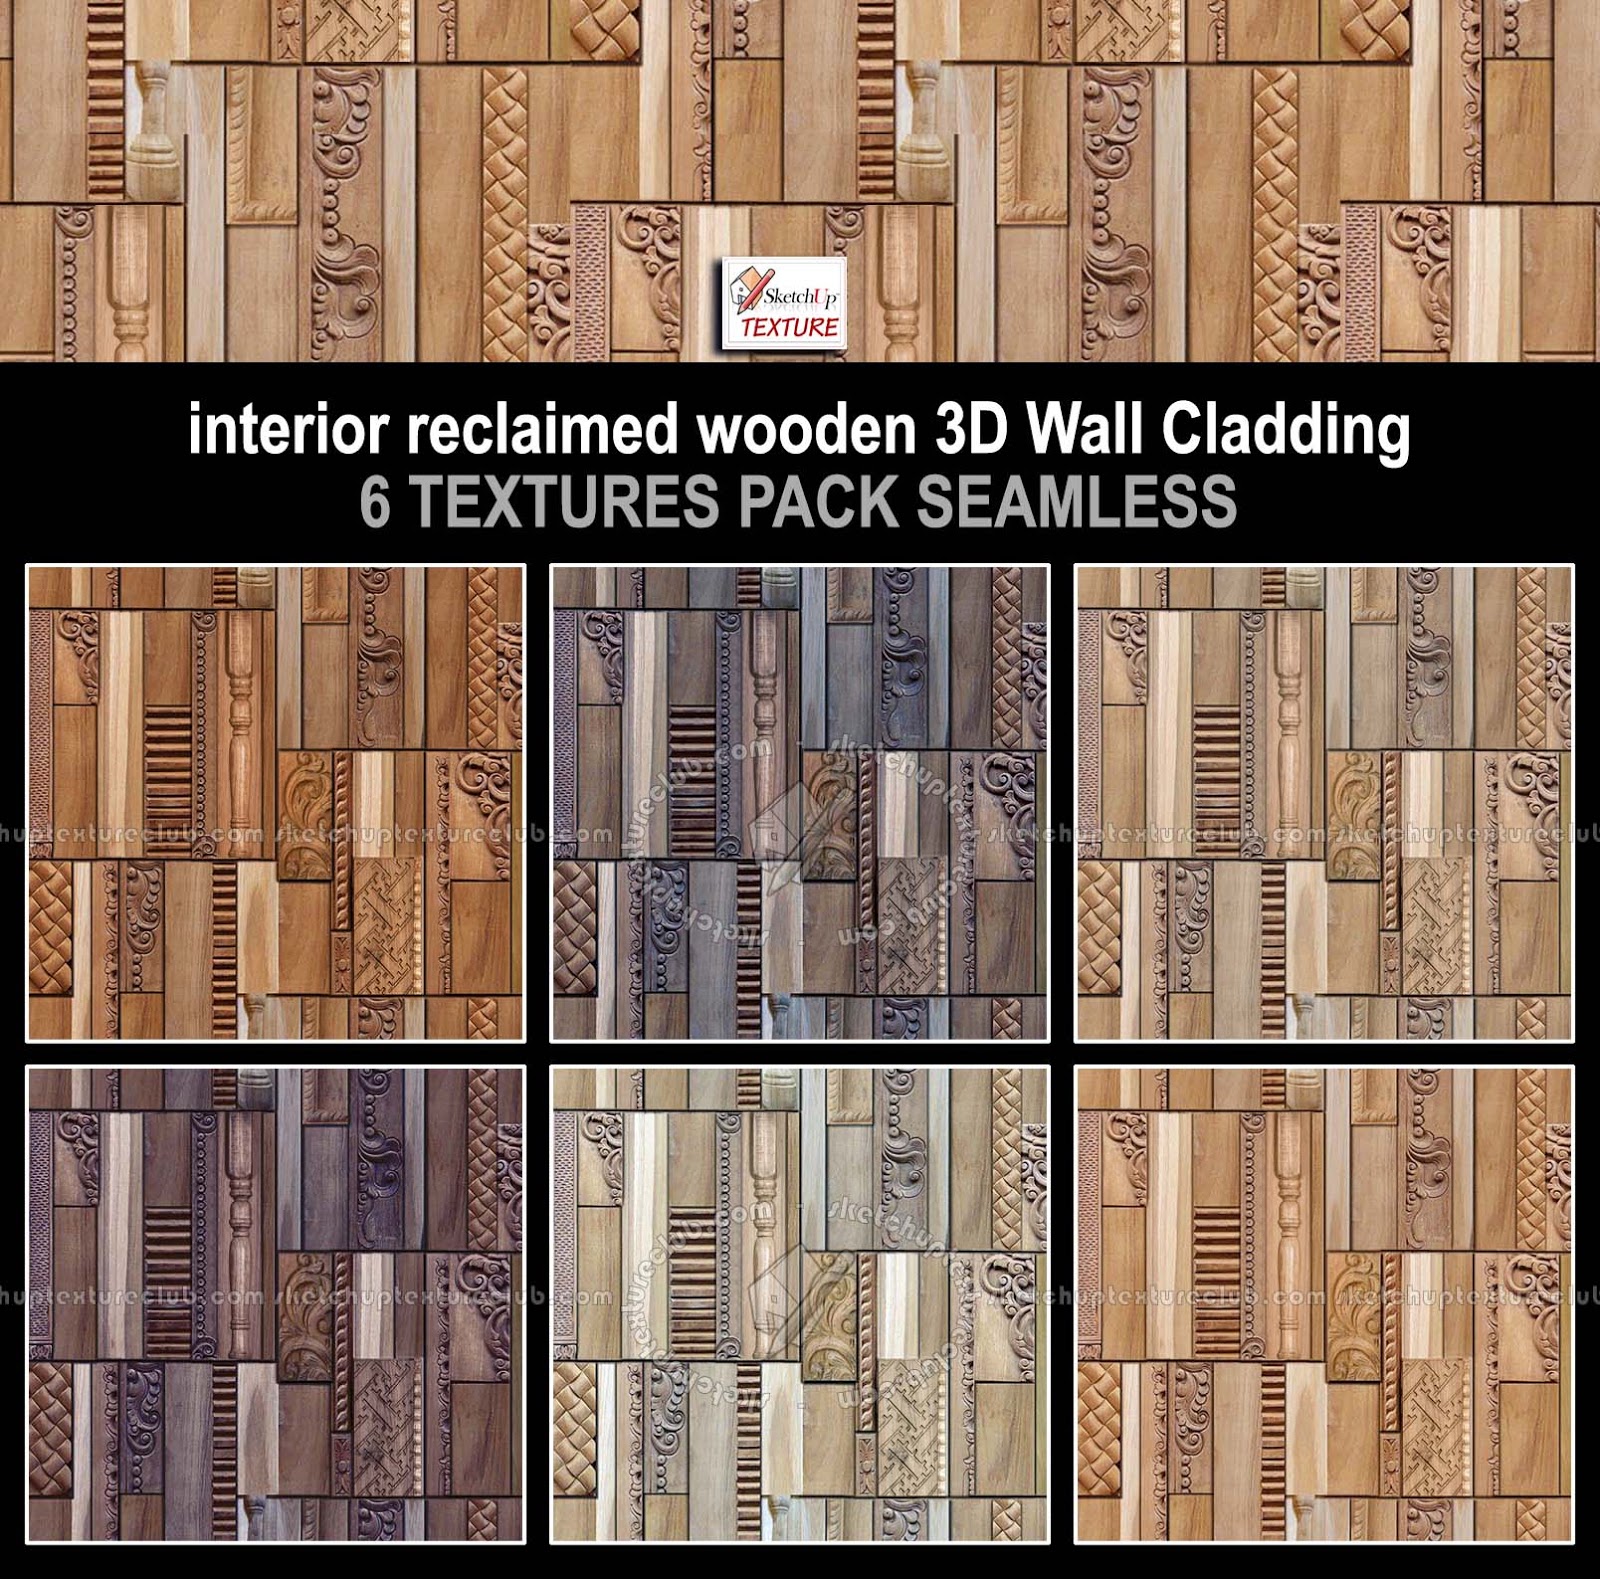 Sketchup Texture New Textures 3d Wall Cladding Interior